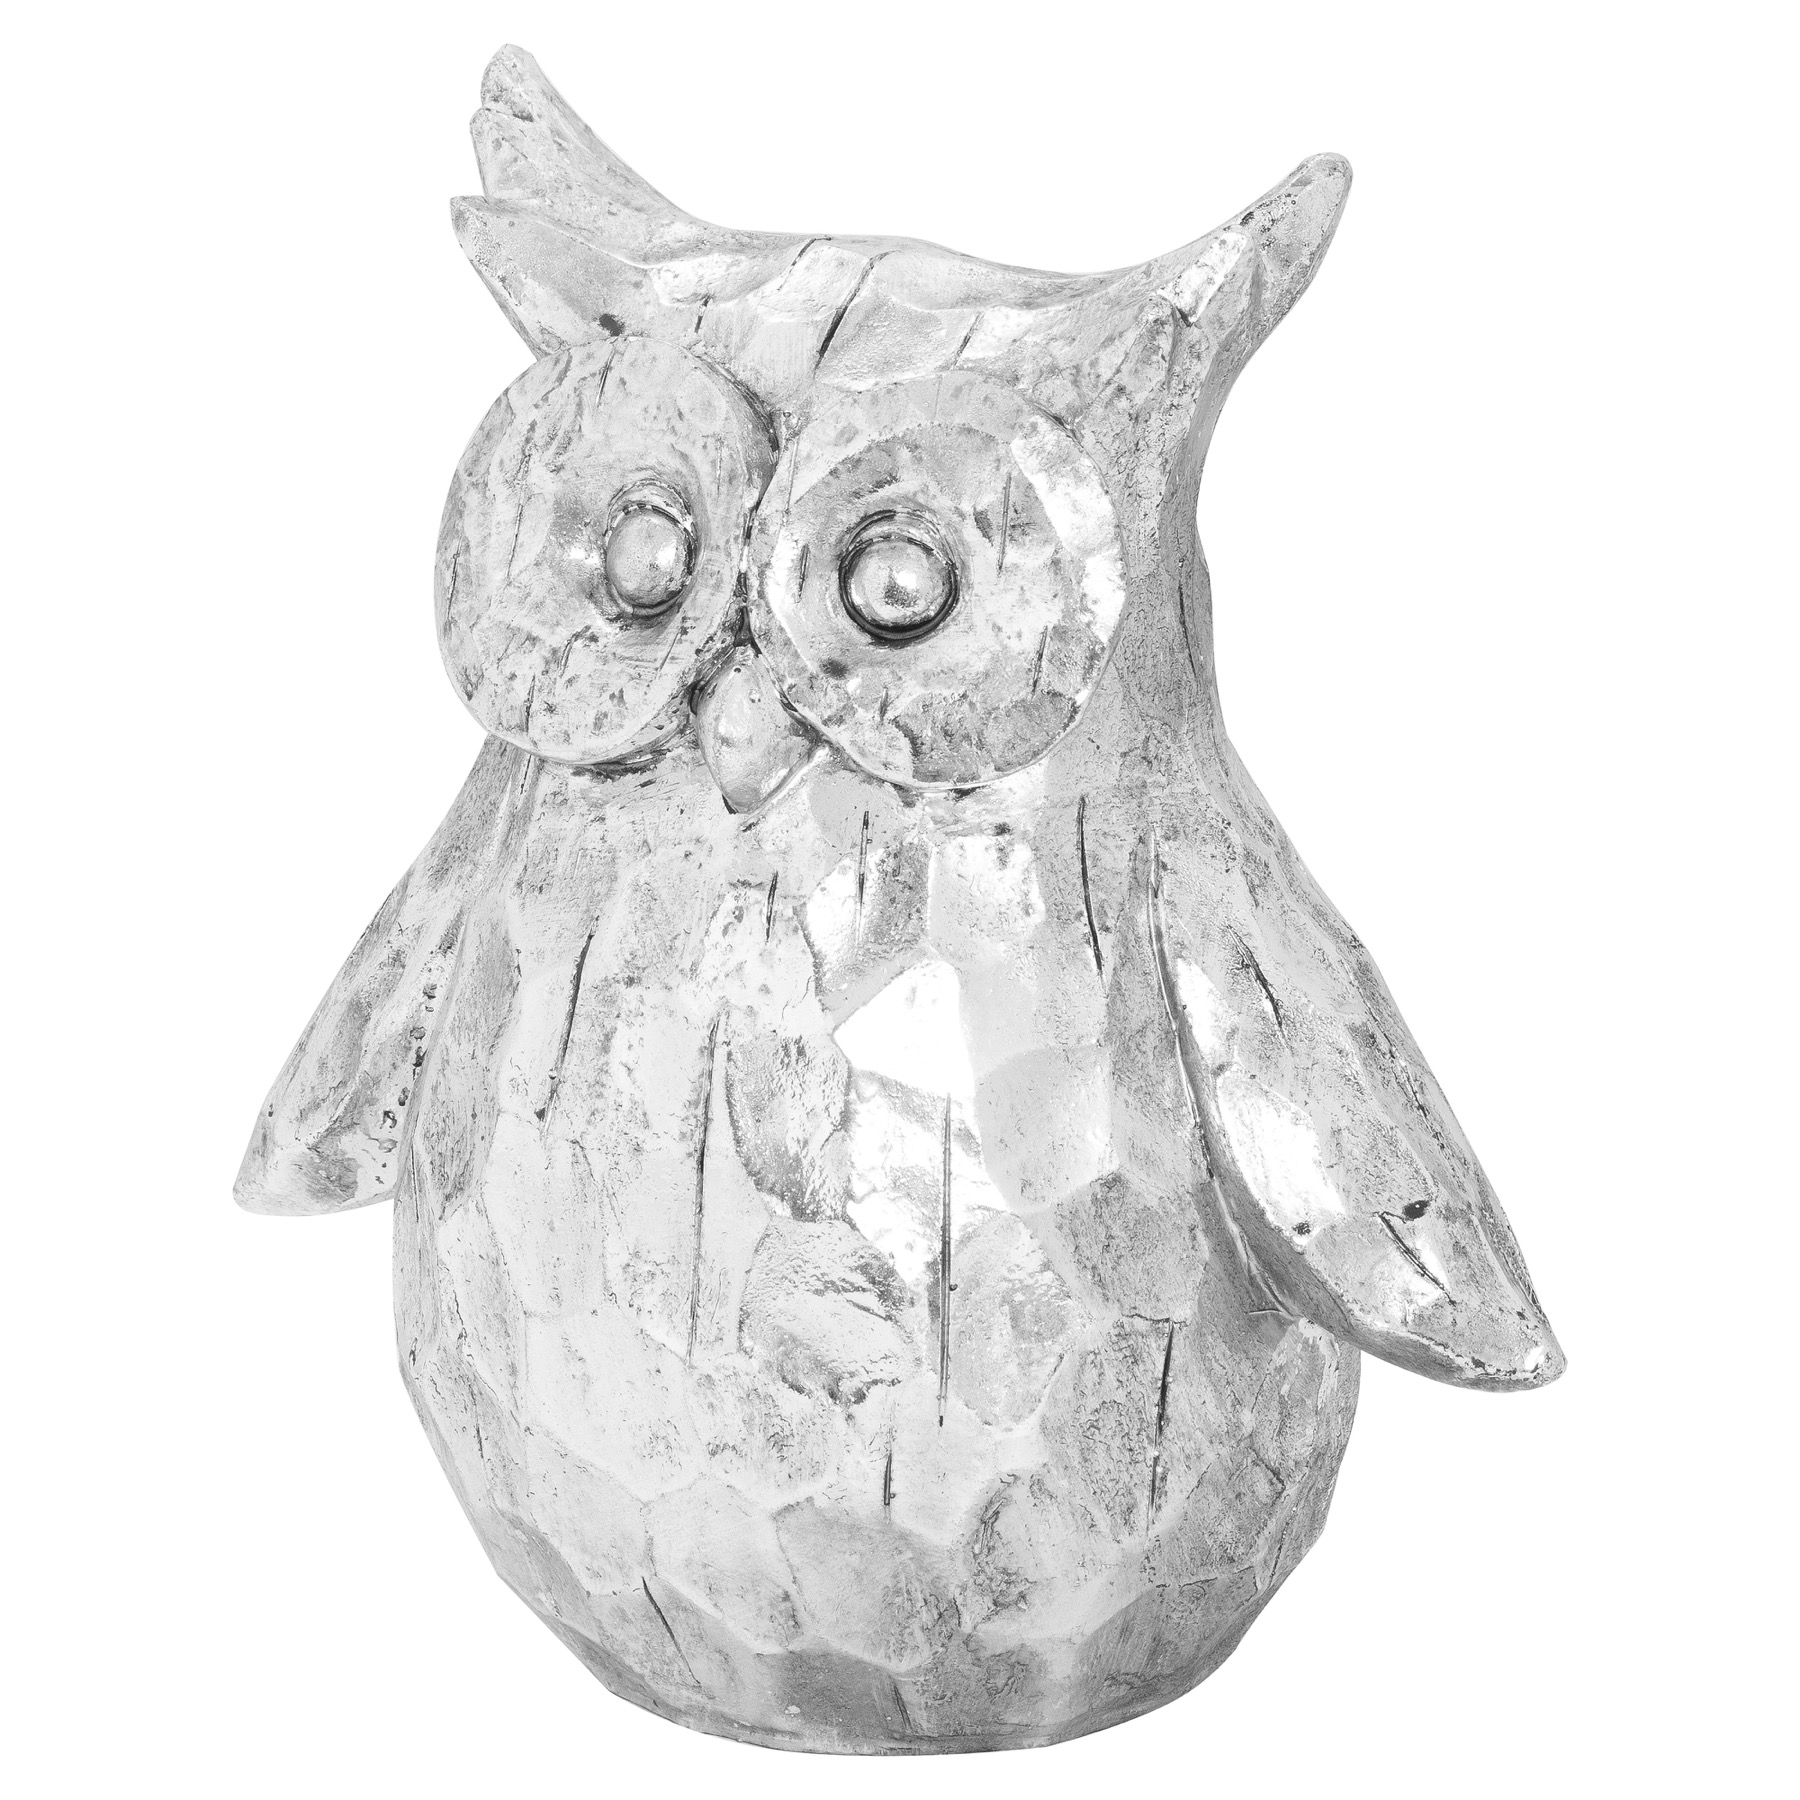 Olive The Large Silver Ceramic Owl - Image 1